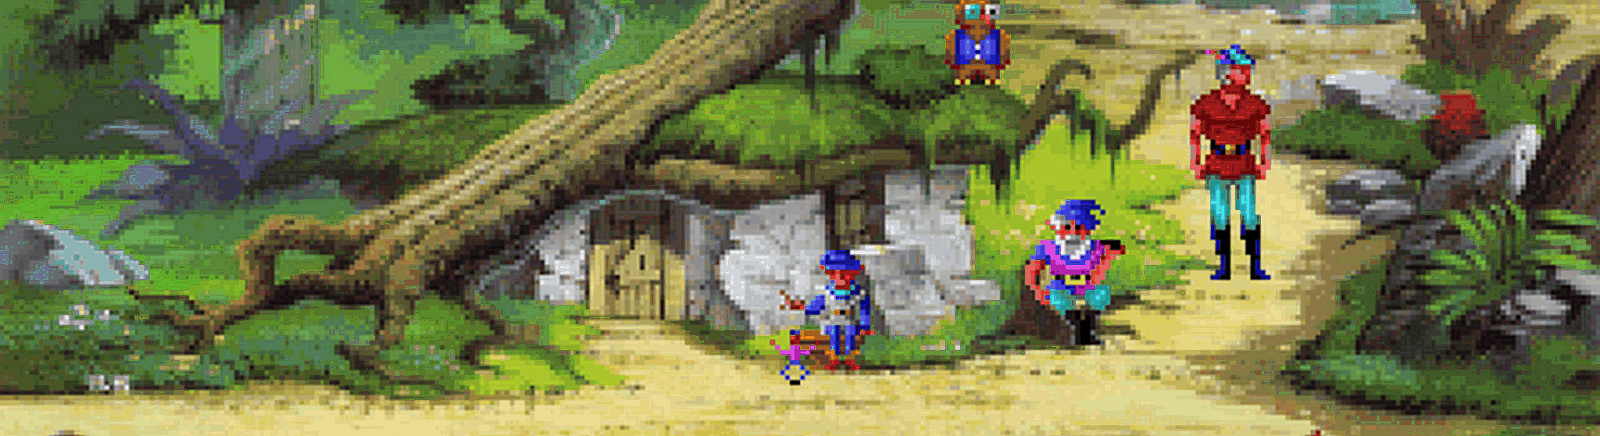 Дата выхода King's Quest 5: Absence Makes the Heart Go Yonder (KQ5)  на NES в России и во всем мире